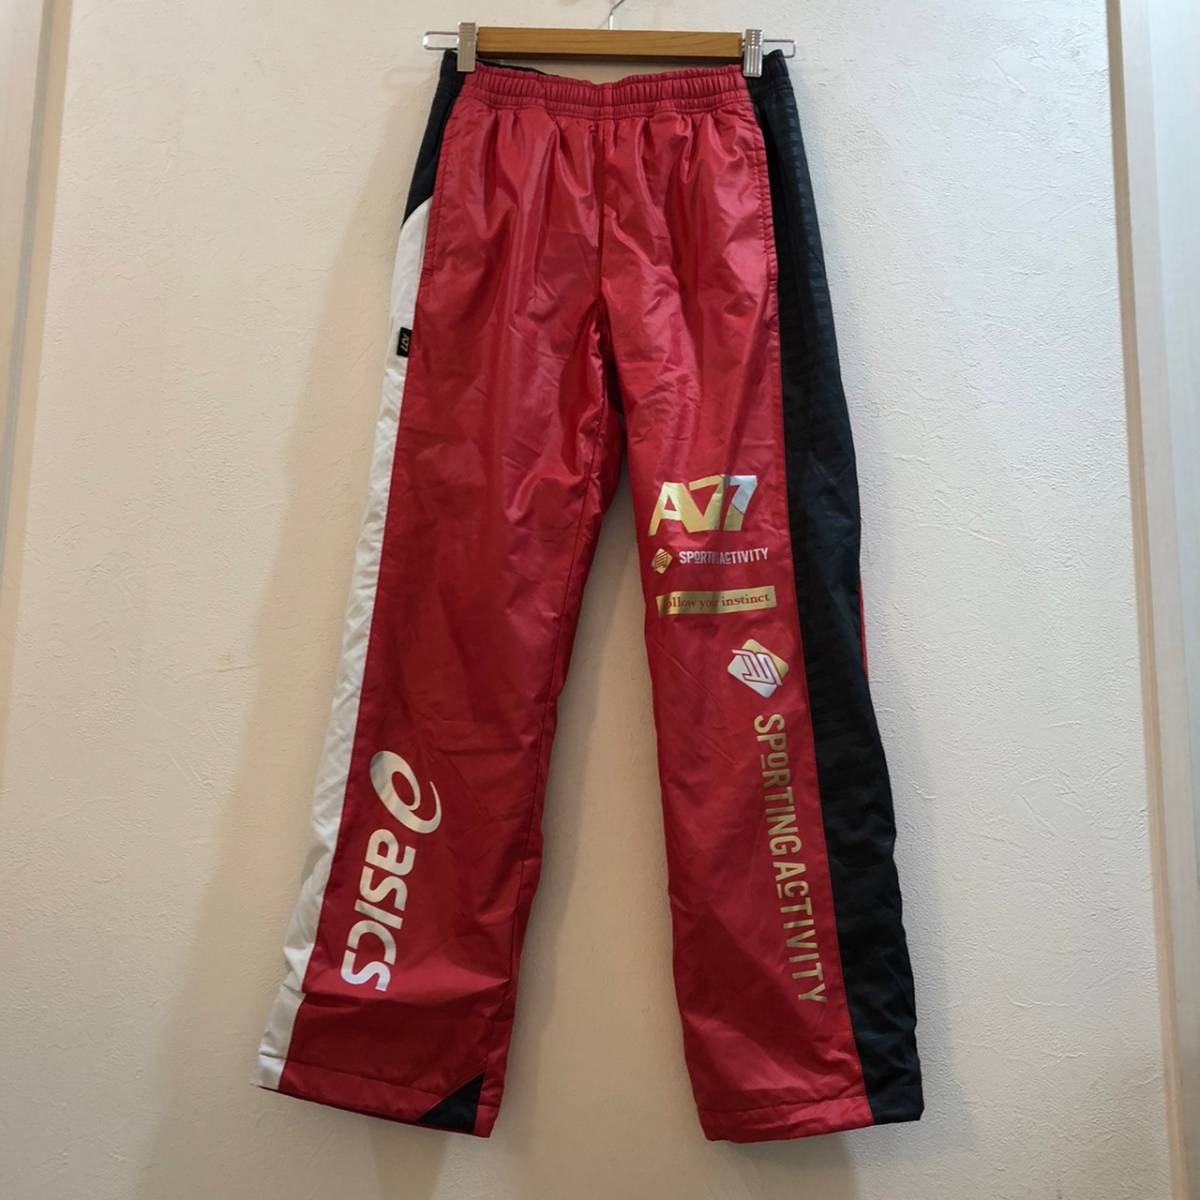 A77 ASICS/ Asics nylon pants SPORTING ACTIVITY red red men's S